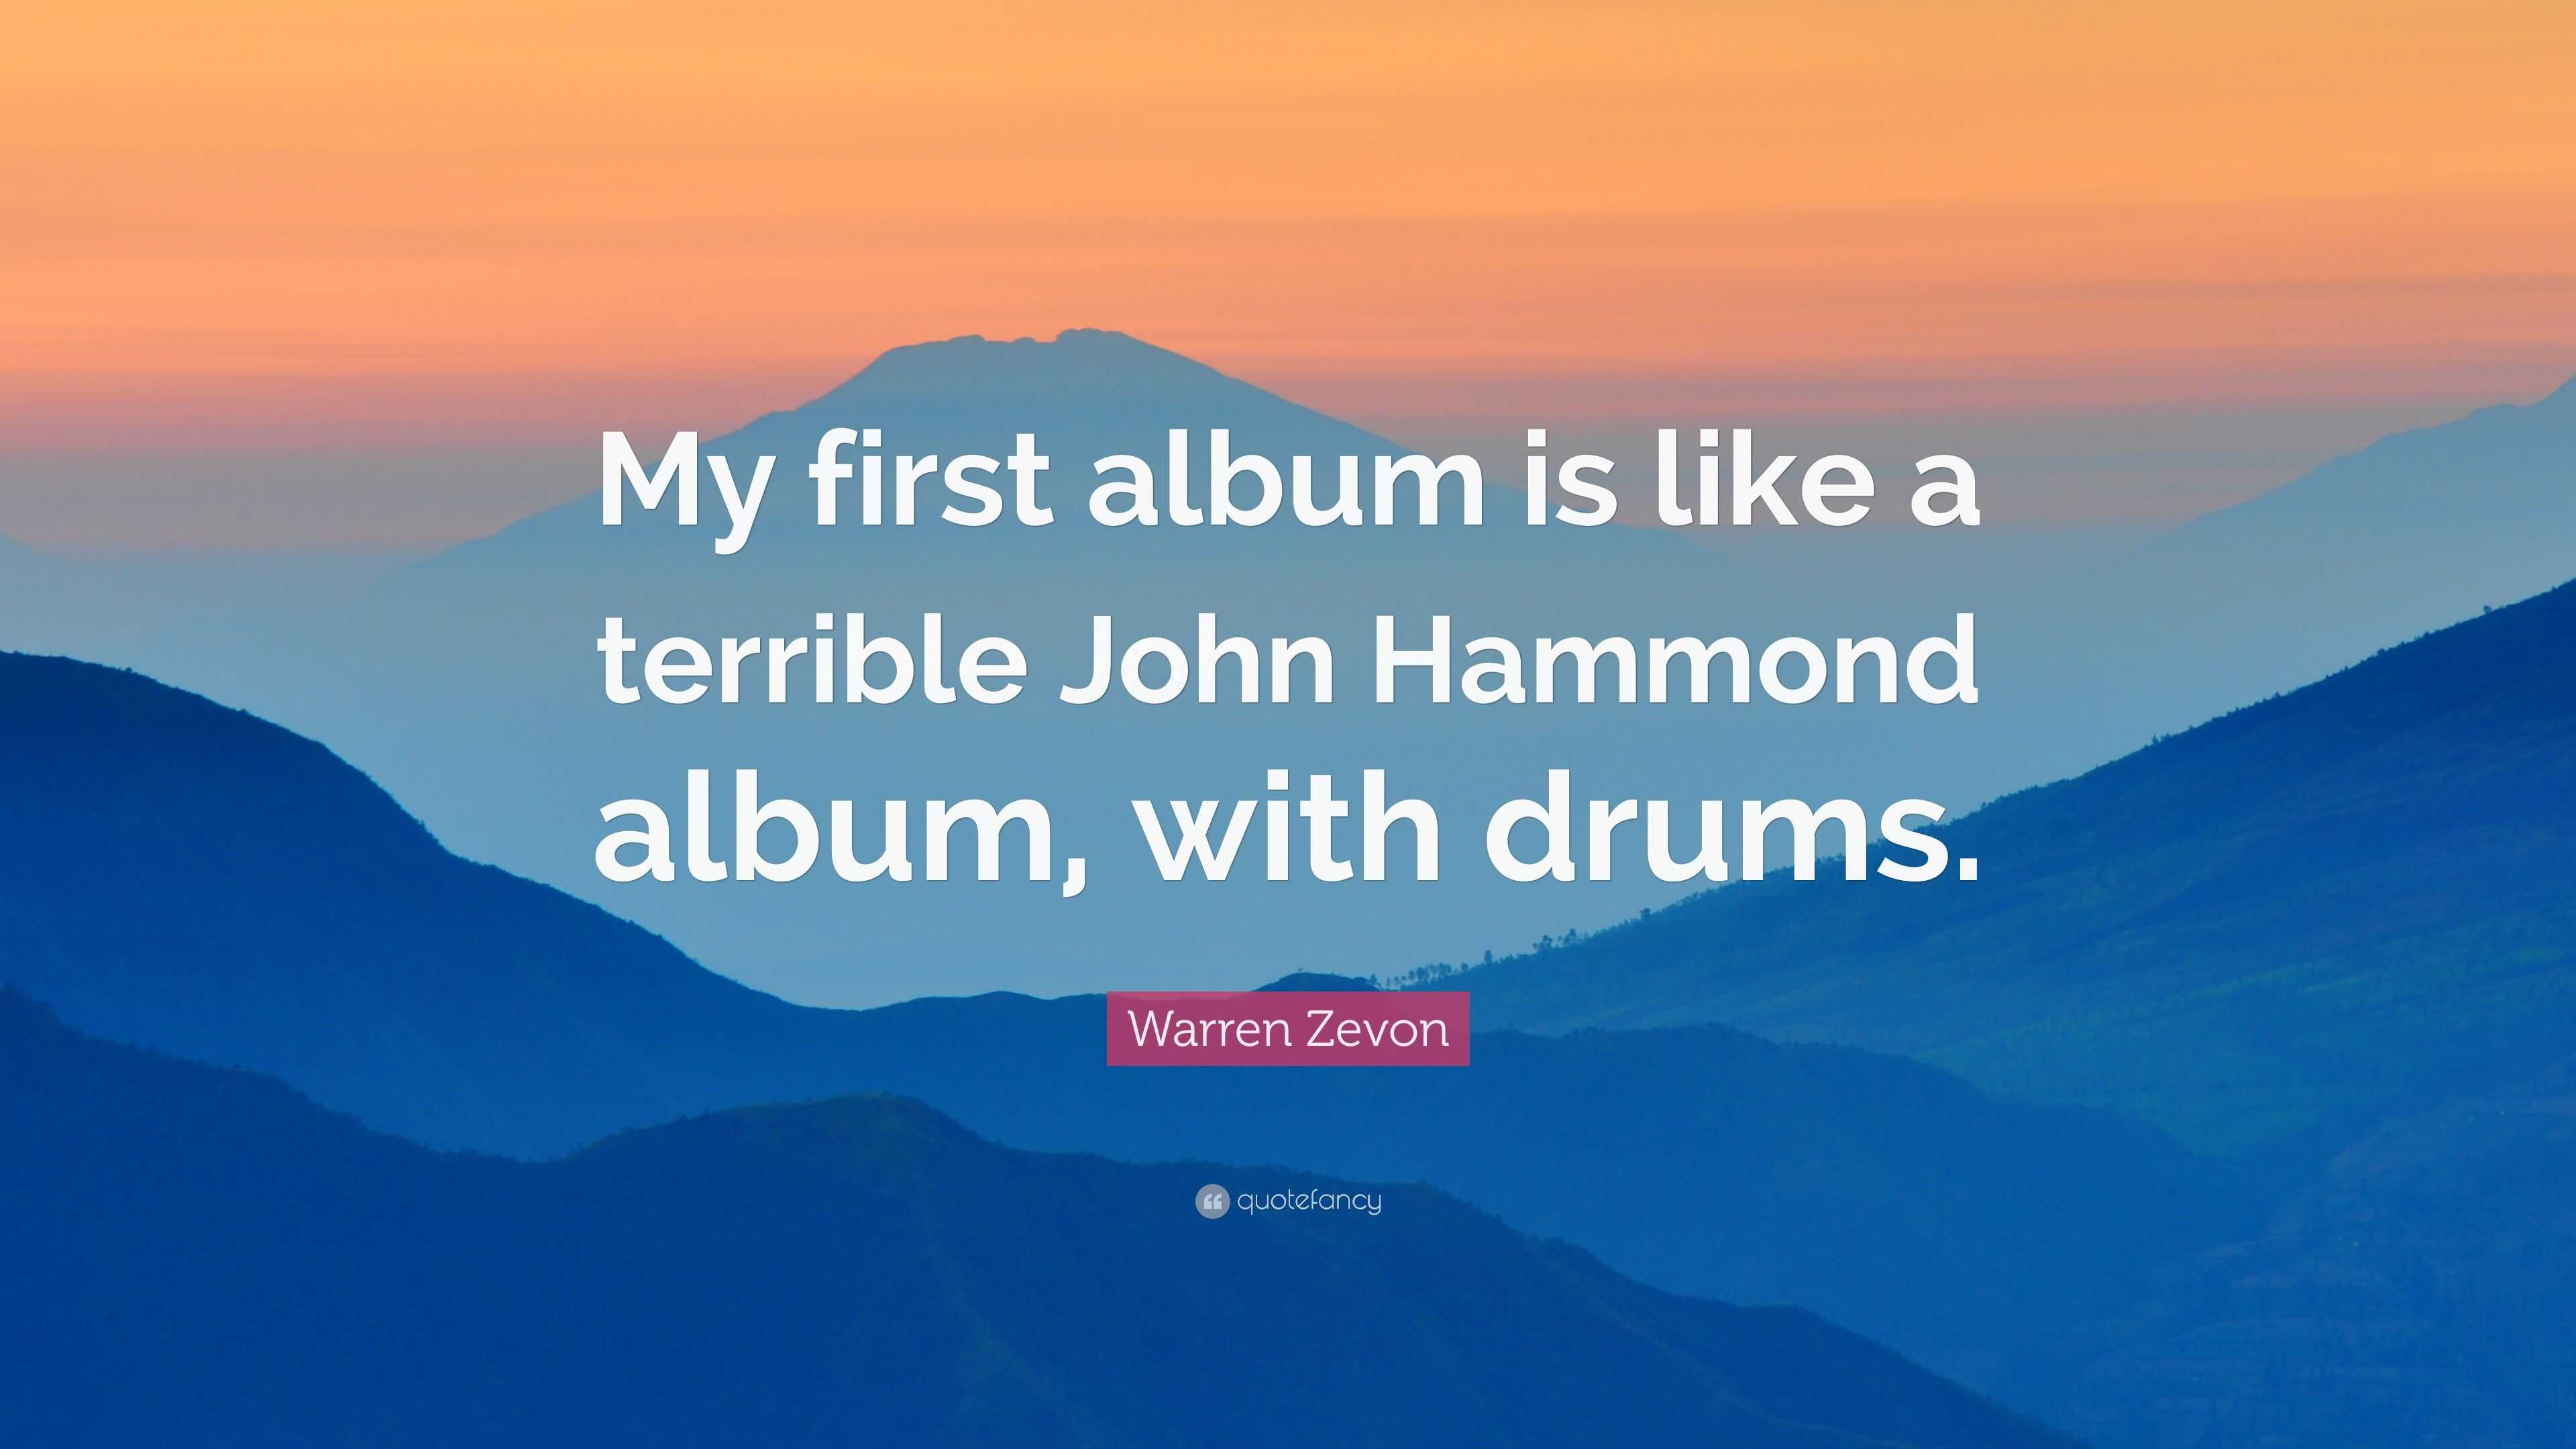 Warren Zevon Quote “my First Album Is Like A Terrible John Hammond Album With Drums” 2642